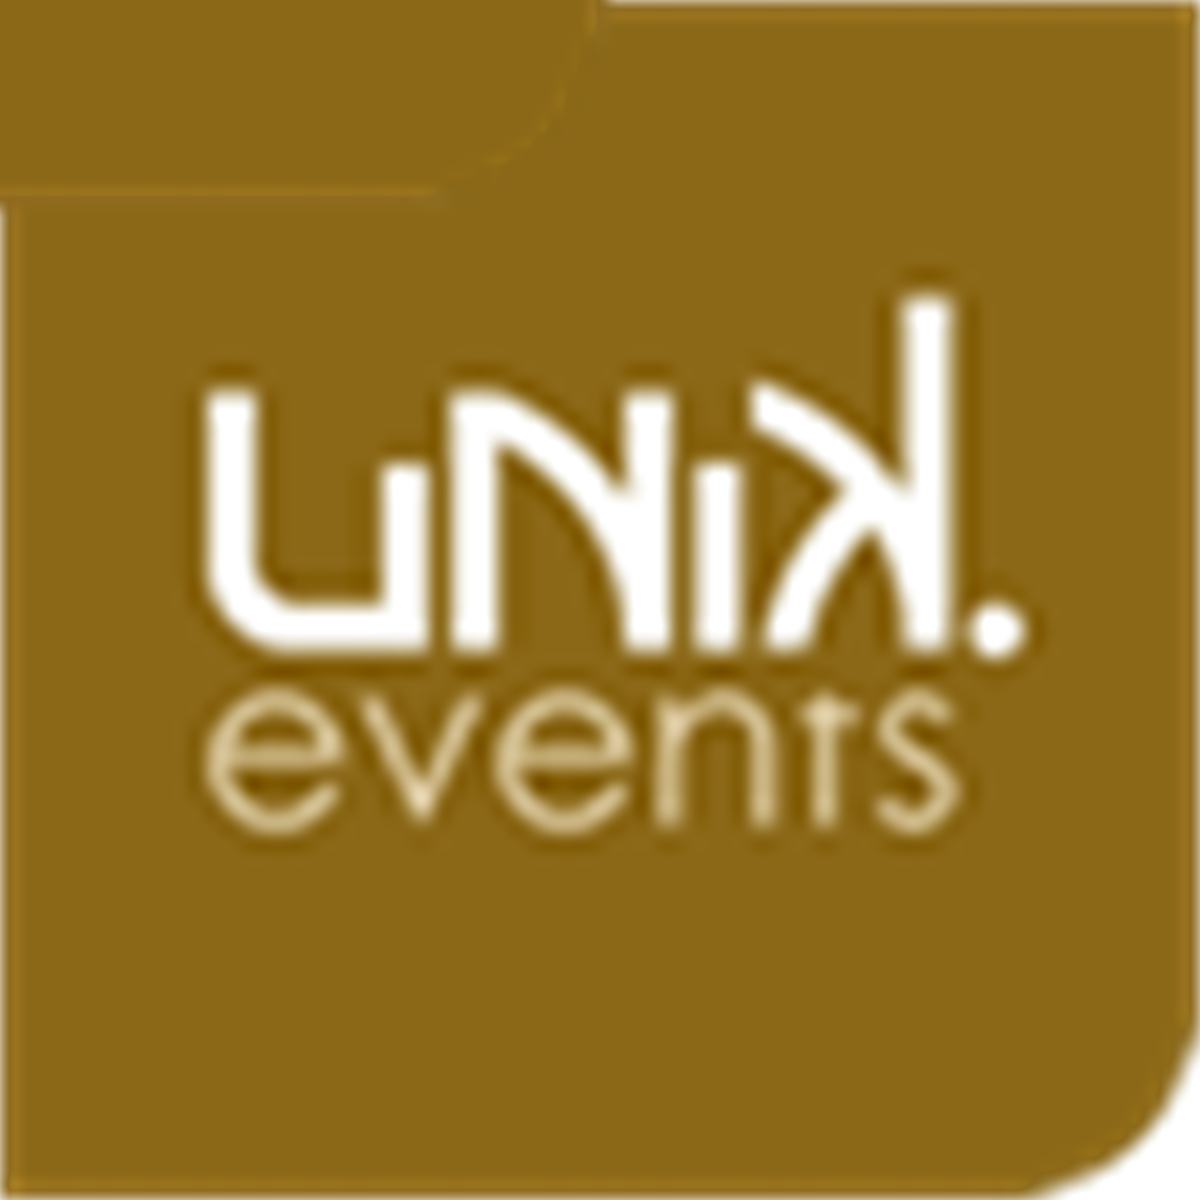 Unik Events